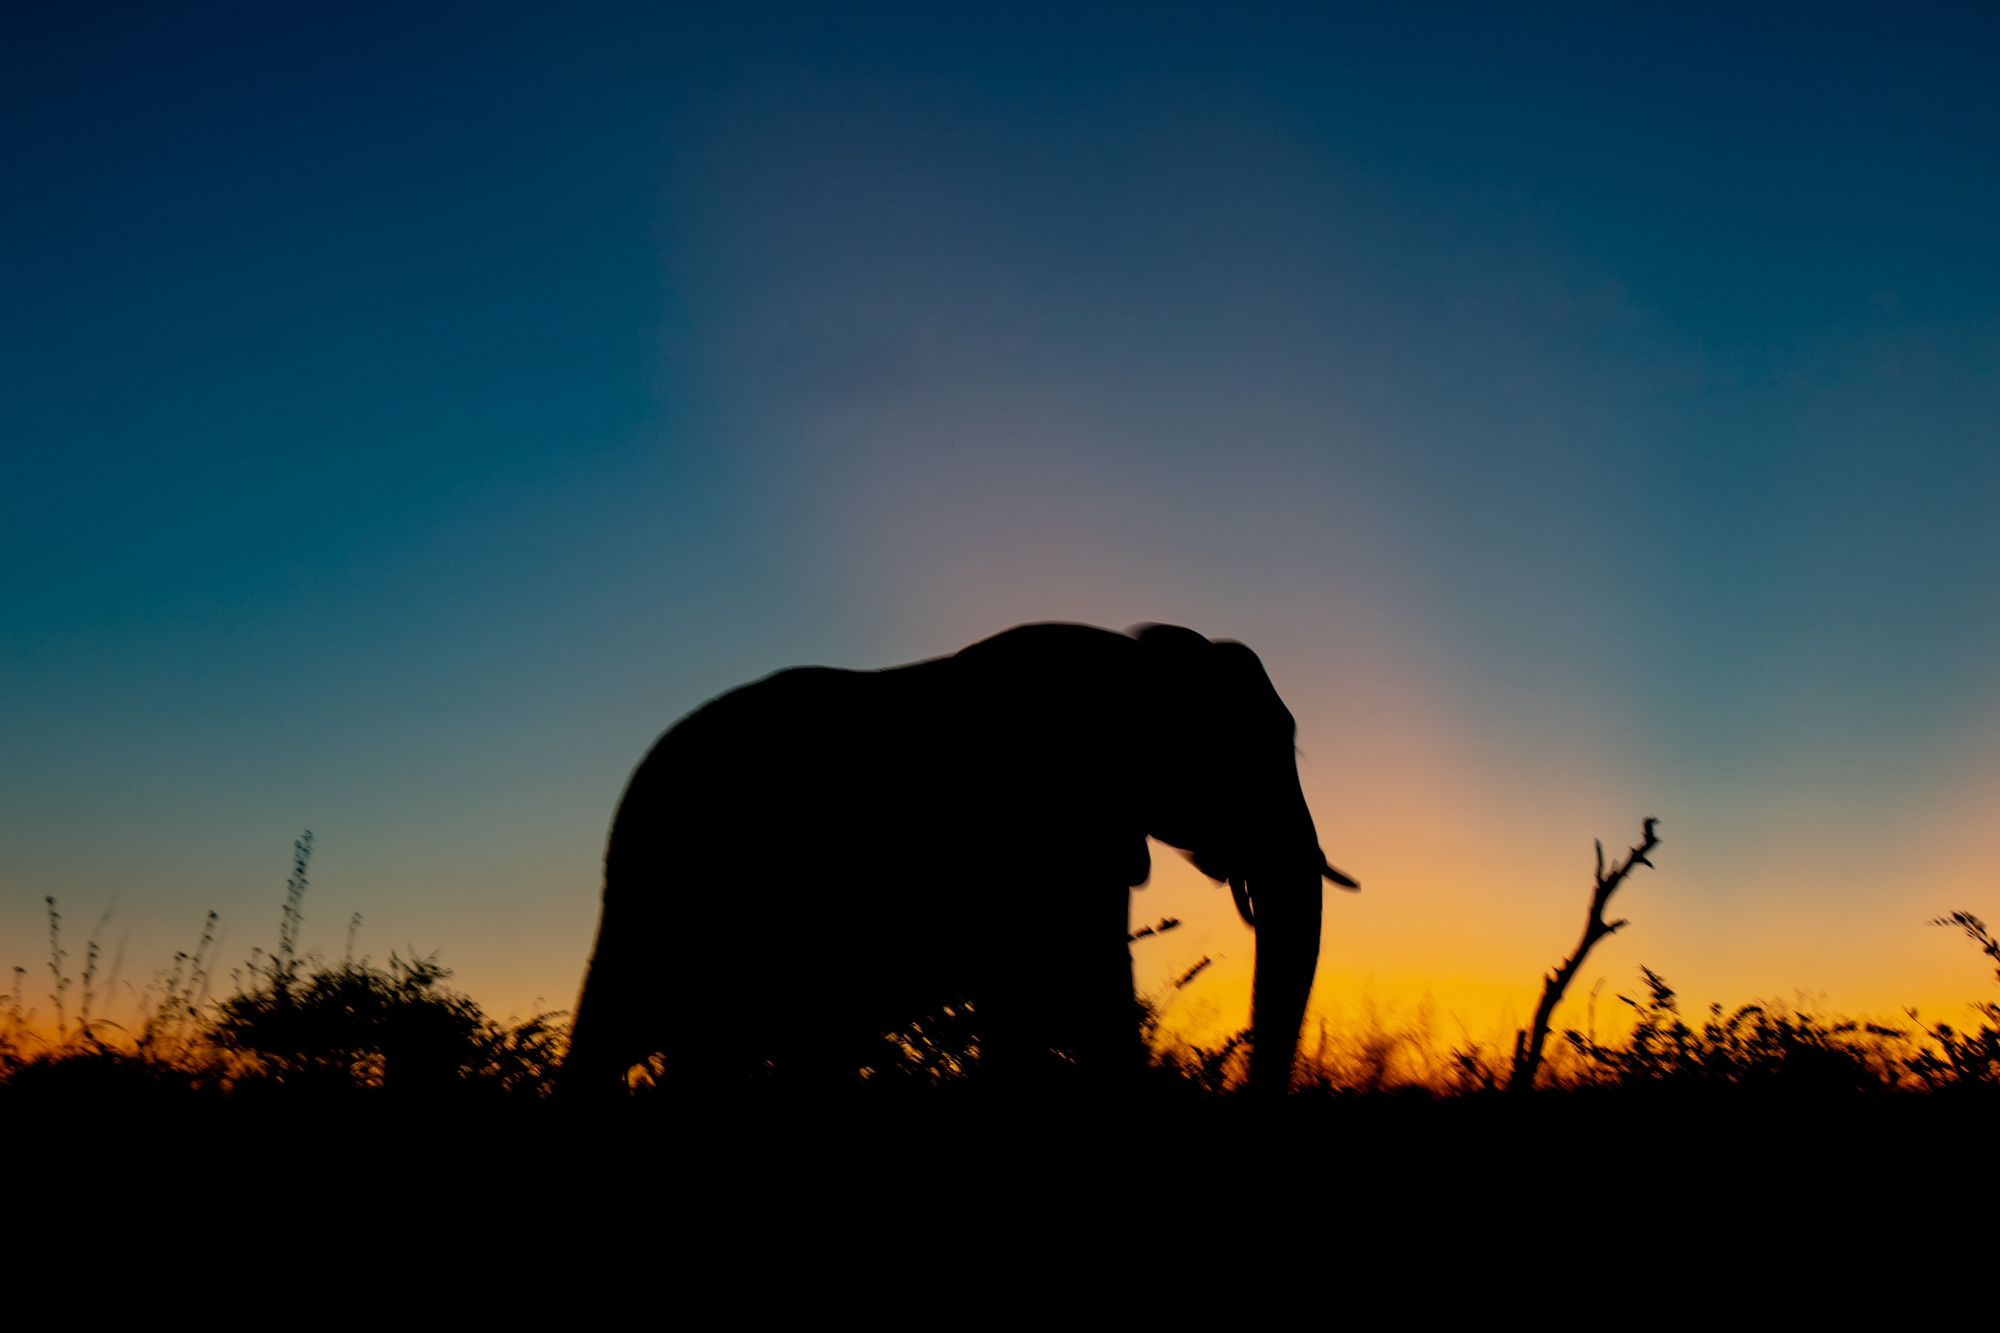 An elephant's silhouette against a sunset